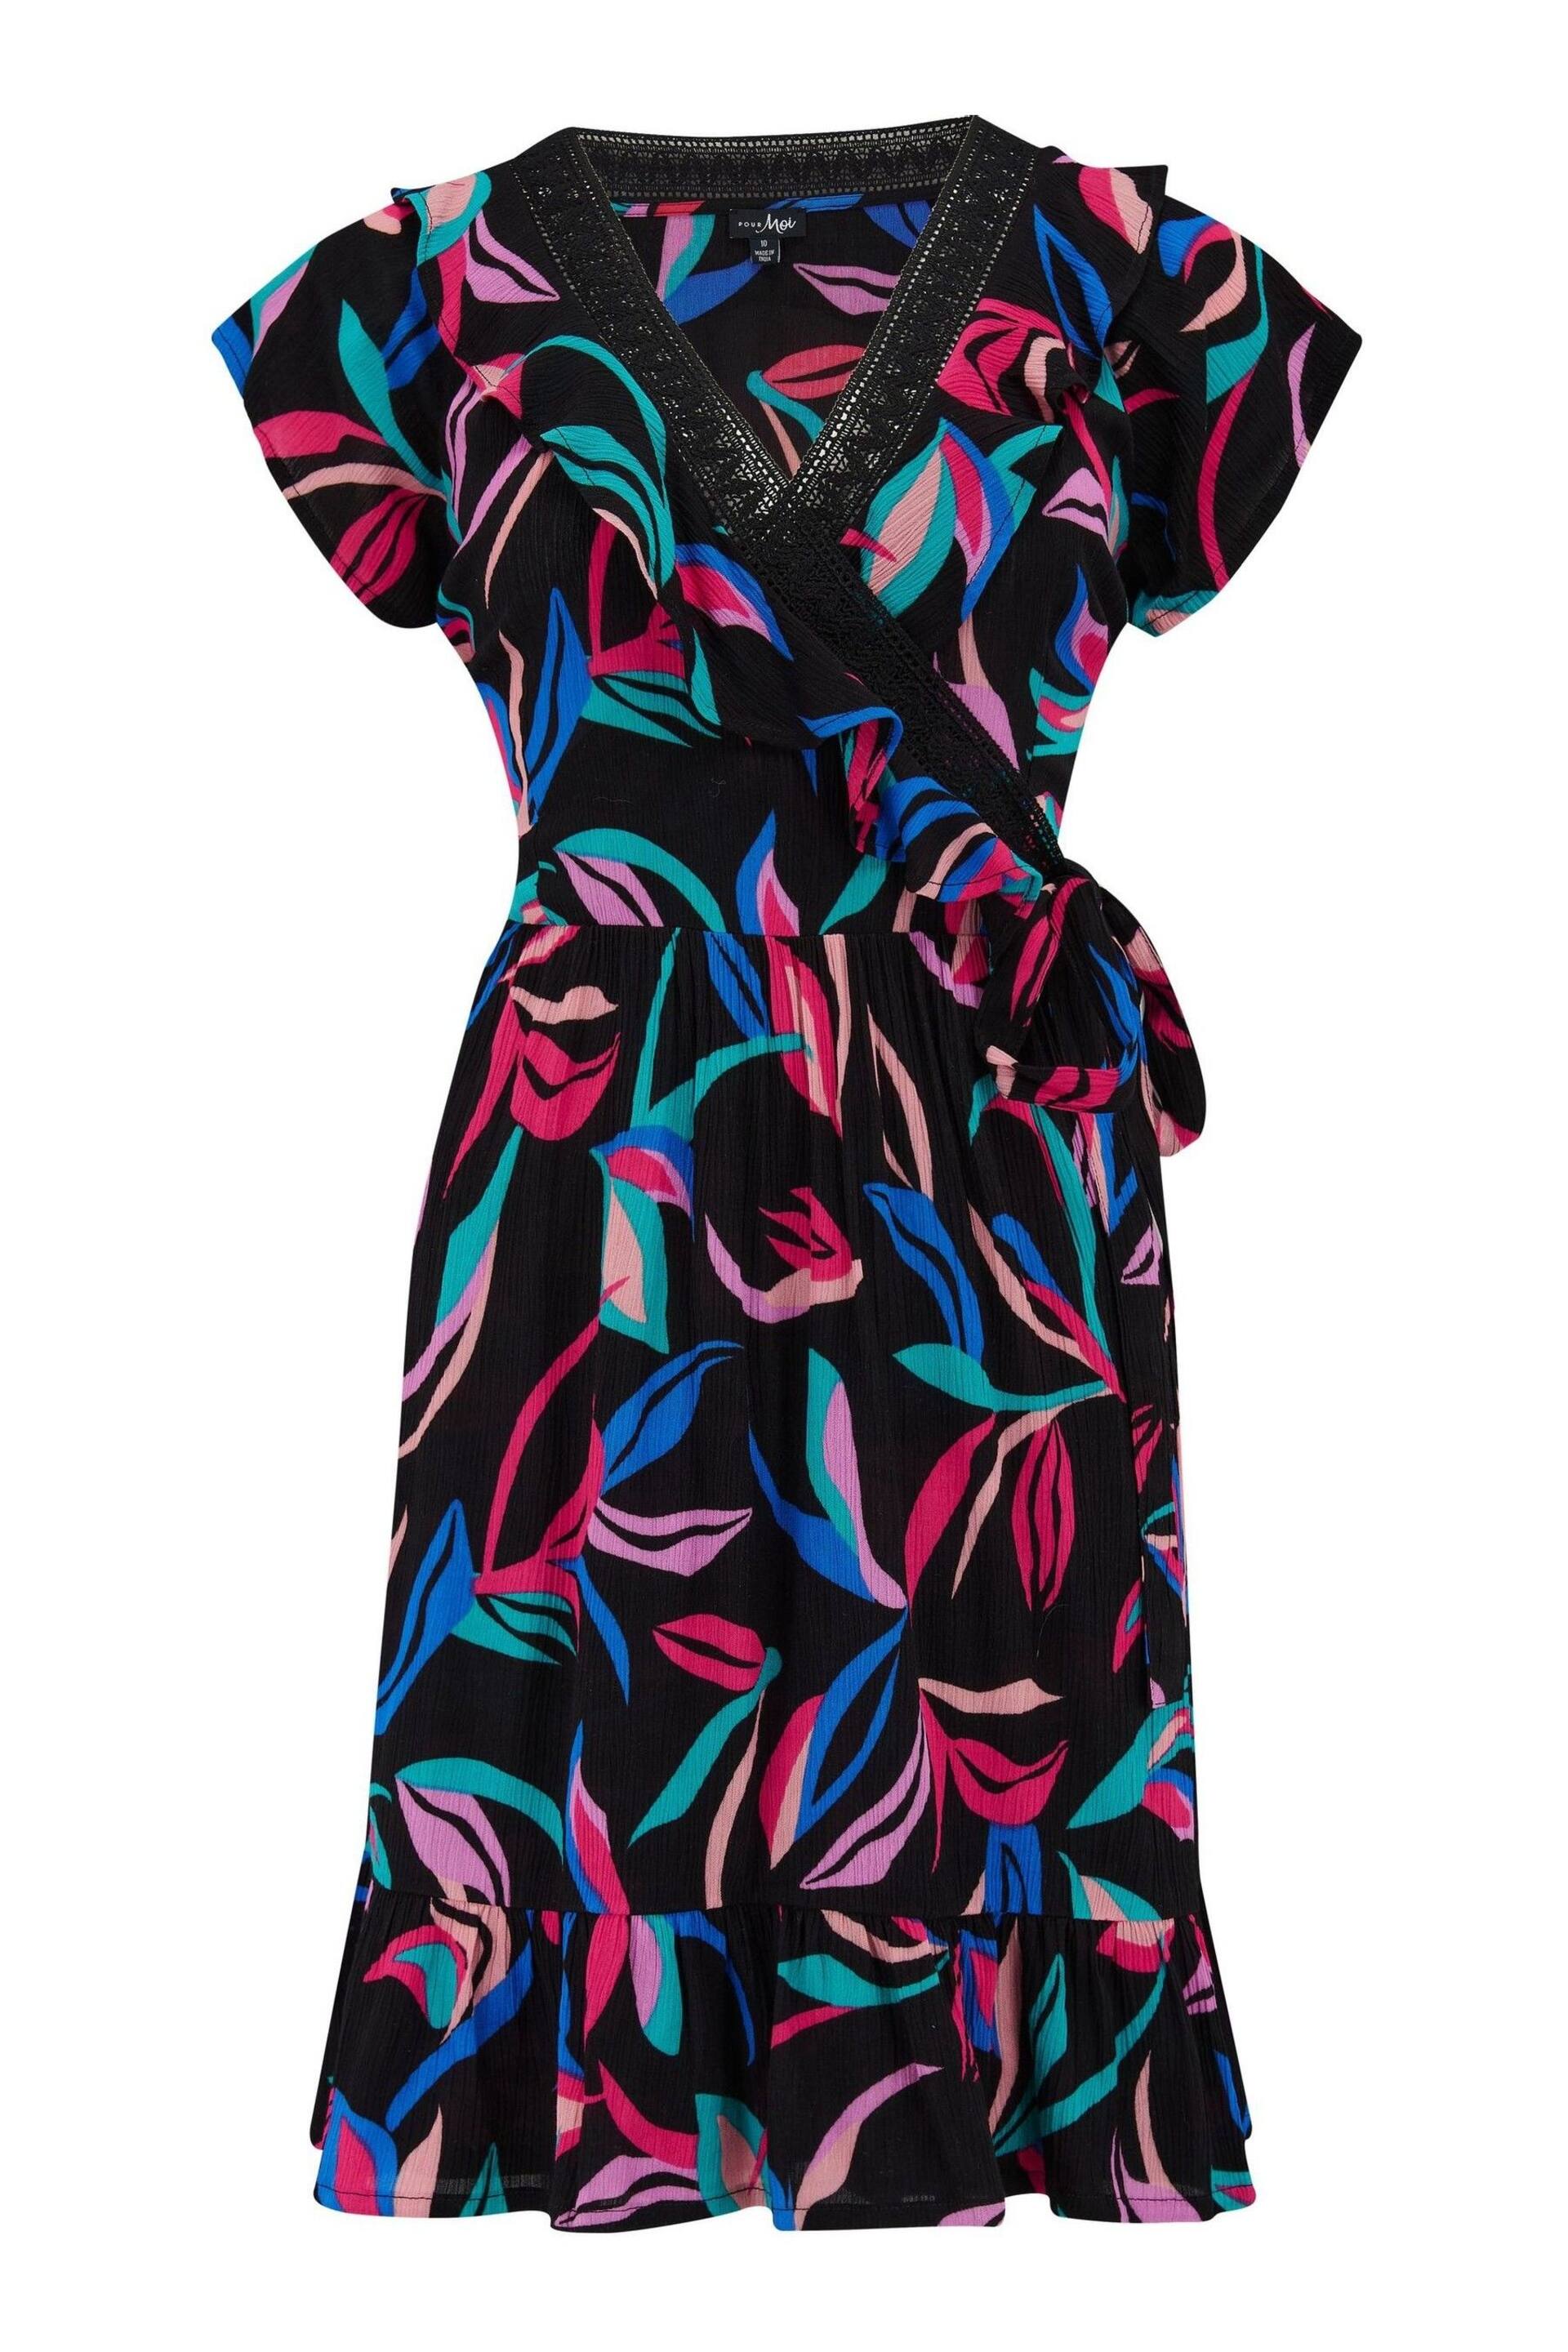 Pour Moi Black LENZING™ ECOVERO™ Viscose Crinkle Frill Wrap Beach Dress - Image 3 of 4